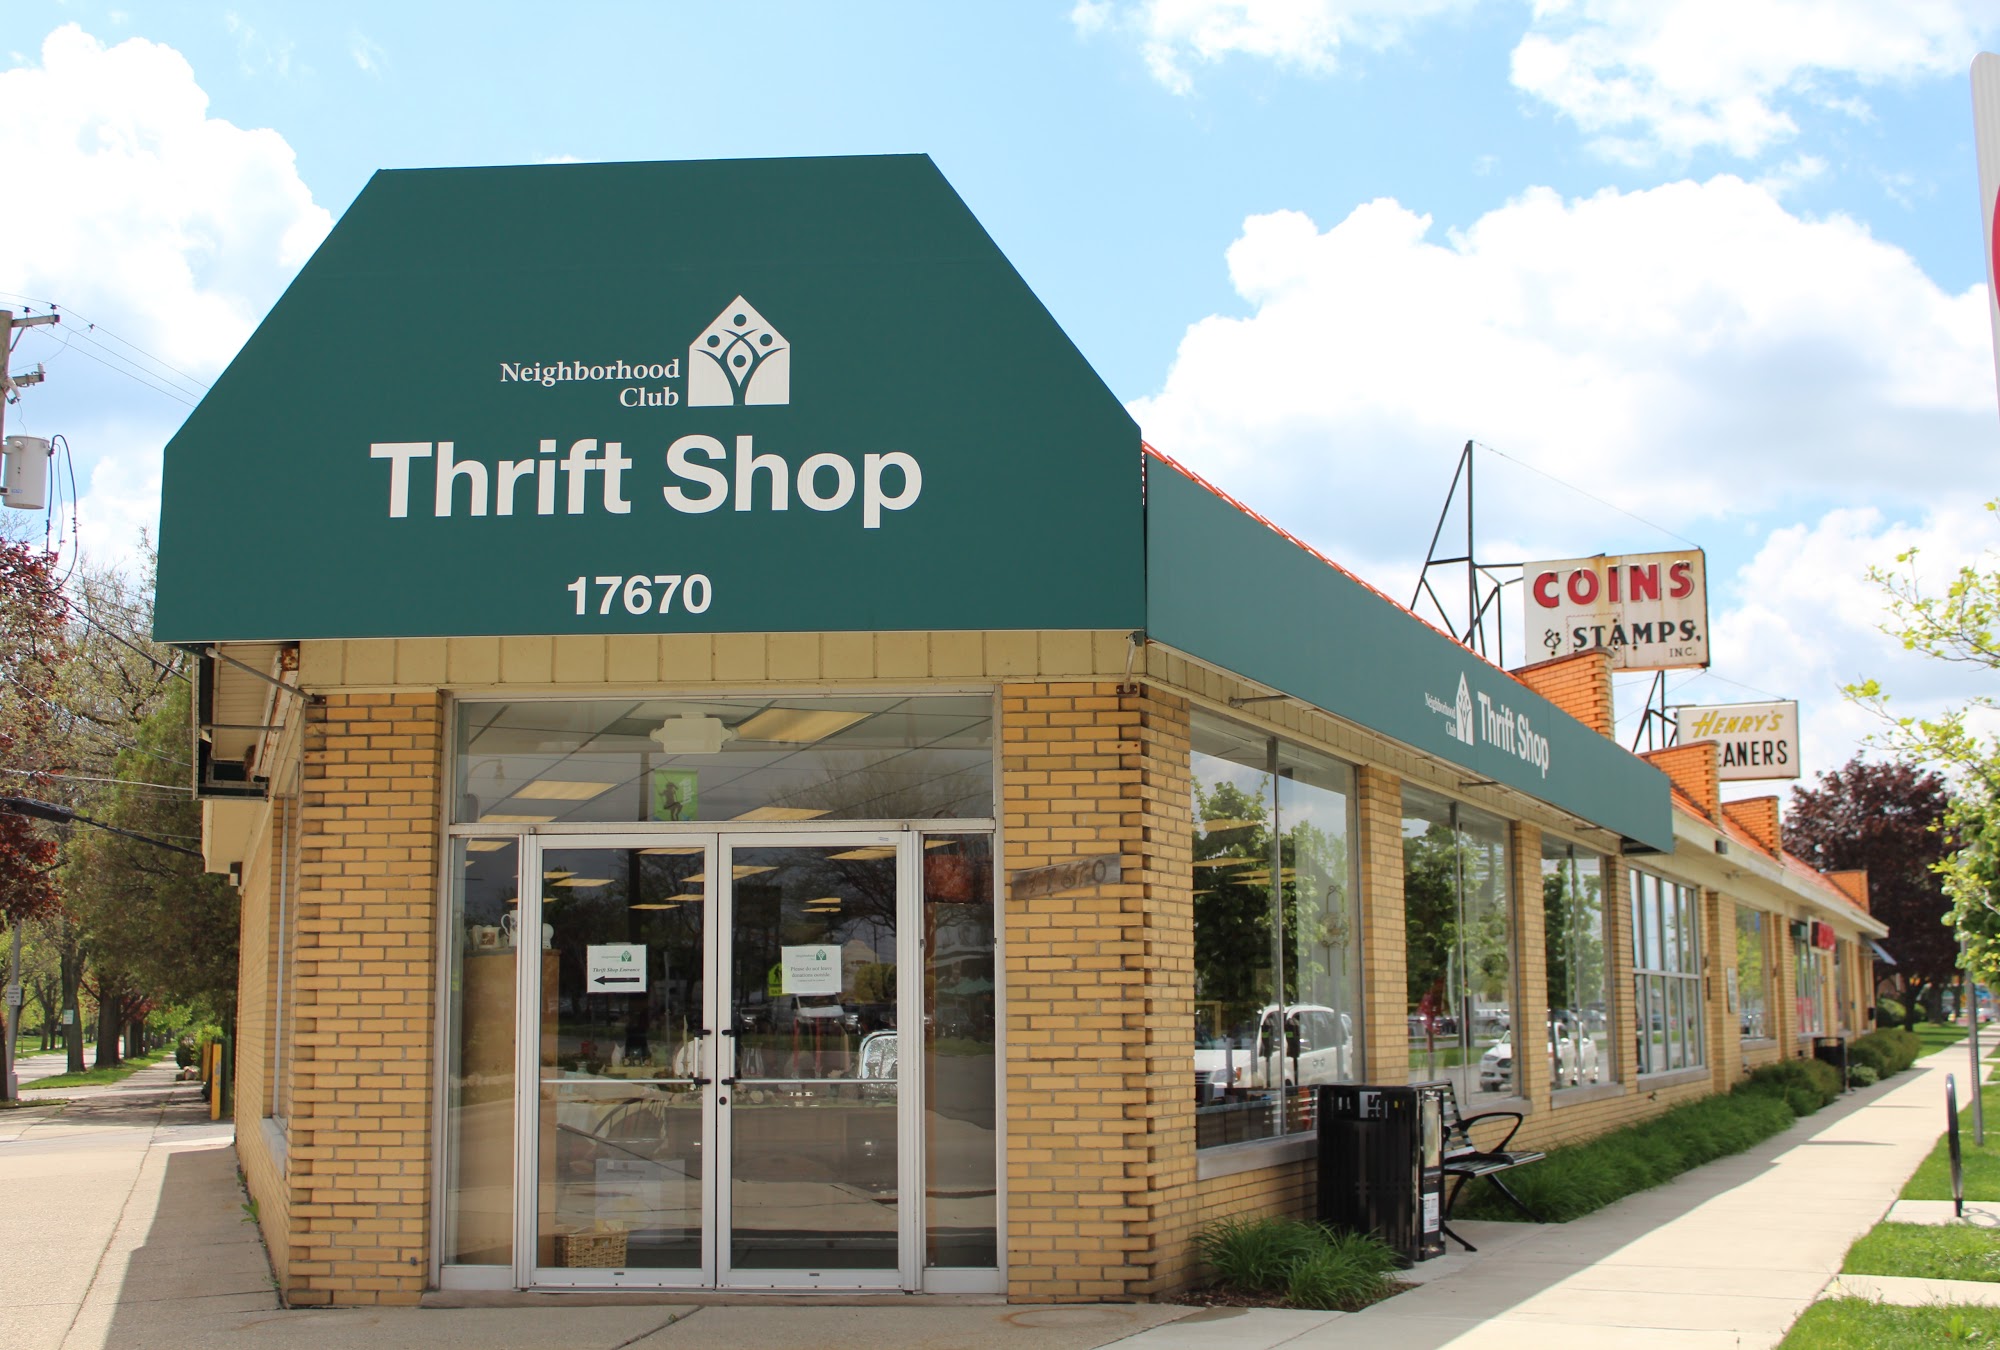 Neighborhood Club Thrift Shop